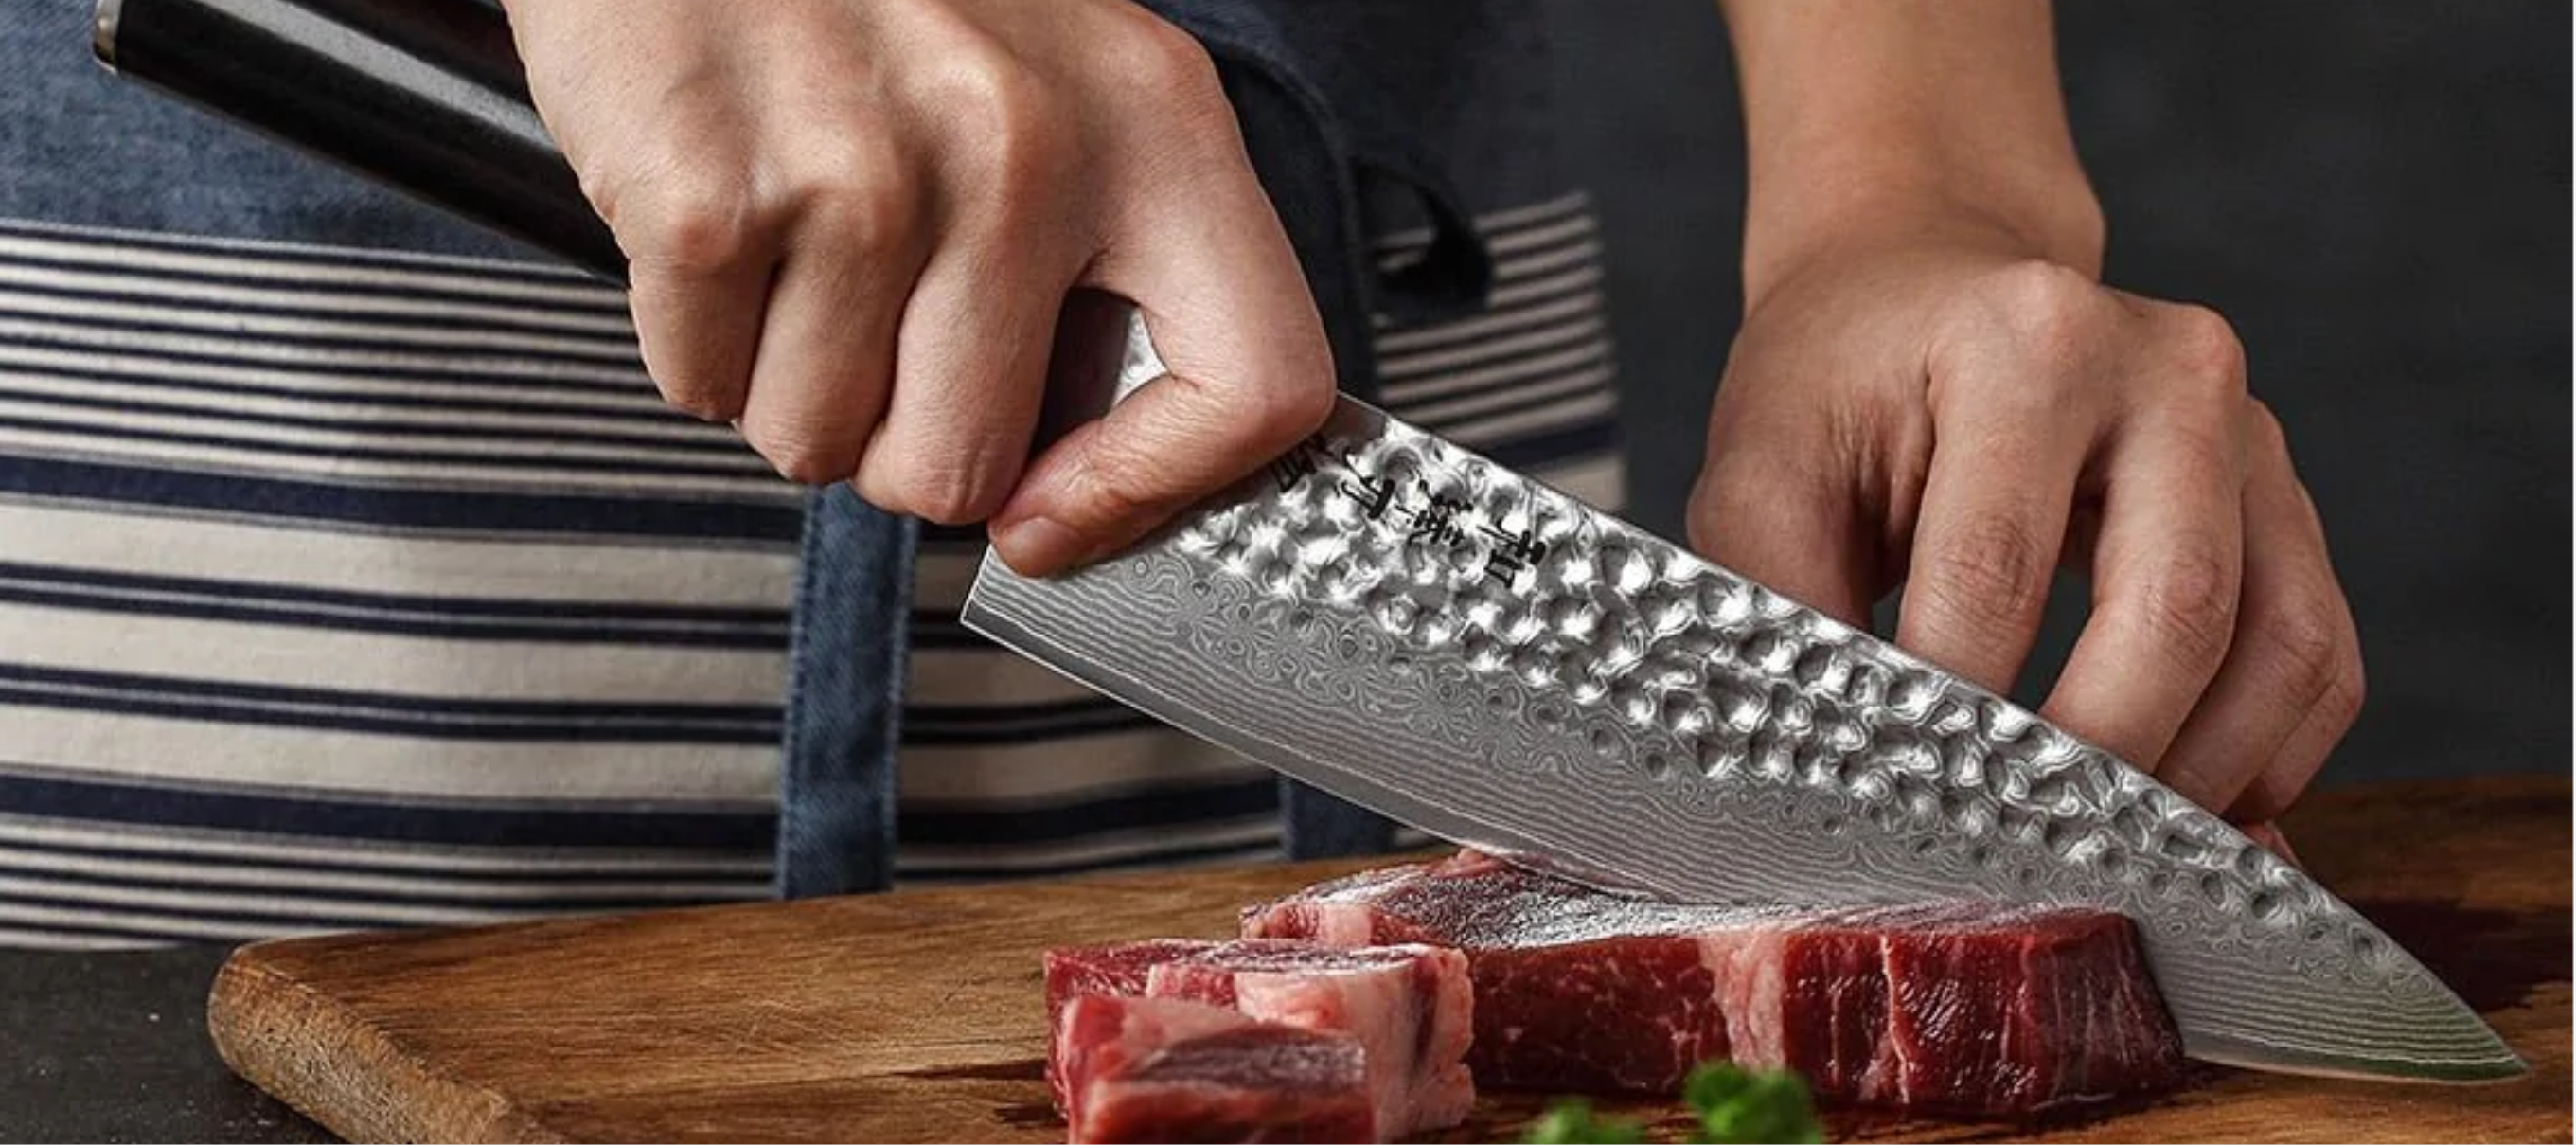 Chinese Cleaver Chef Knife Bones Chopping Butcher Tool -  Israel